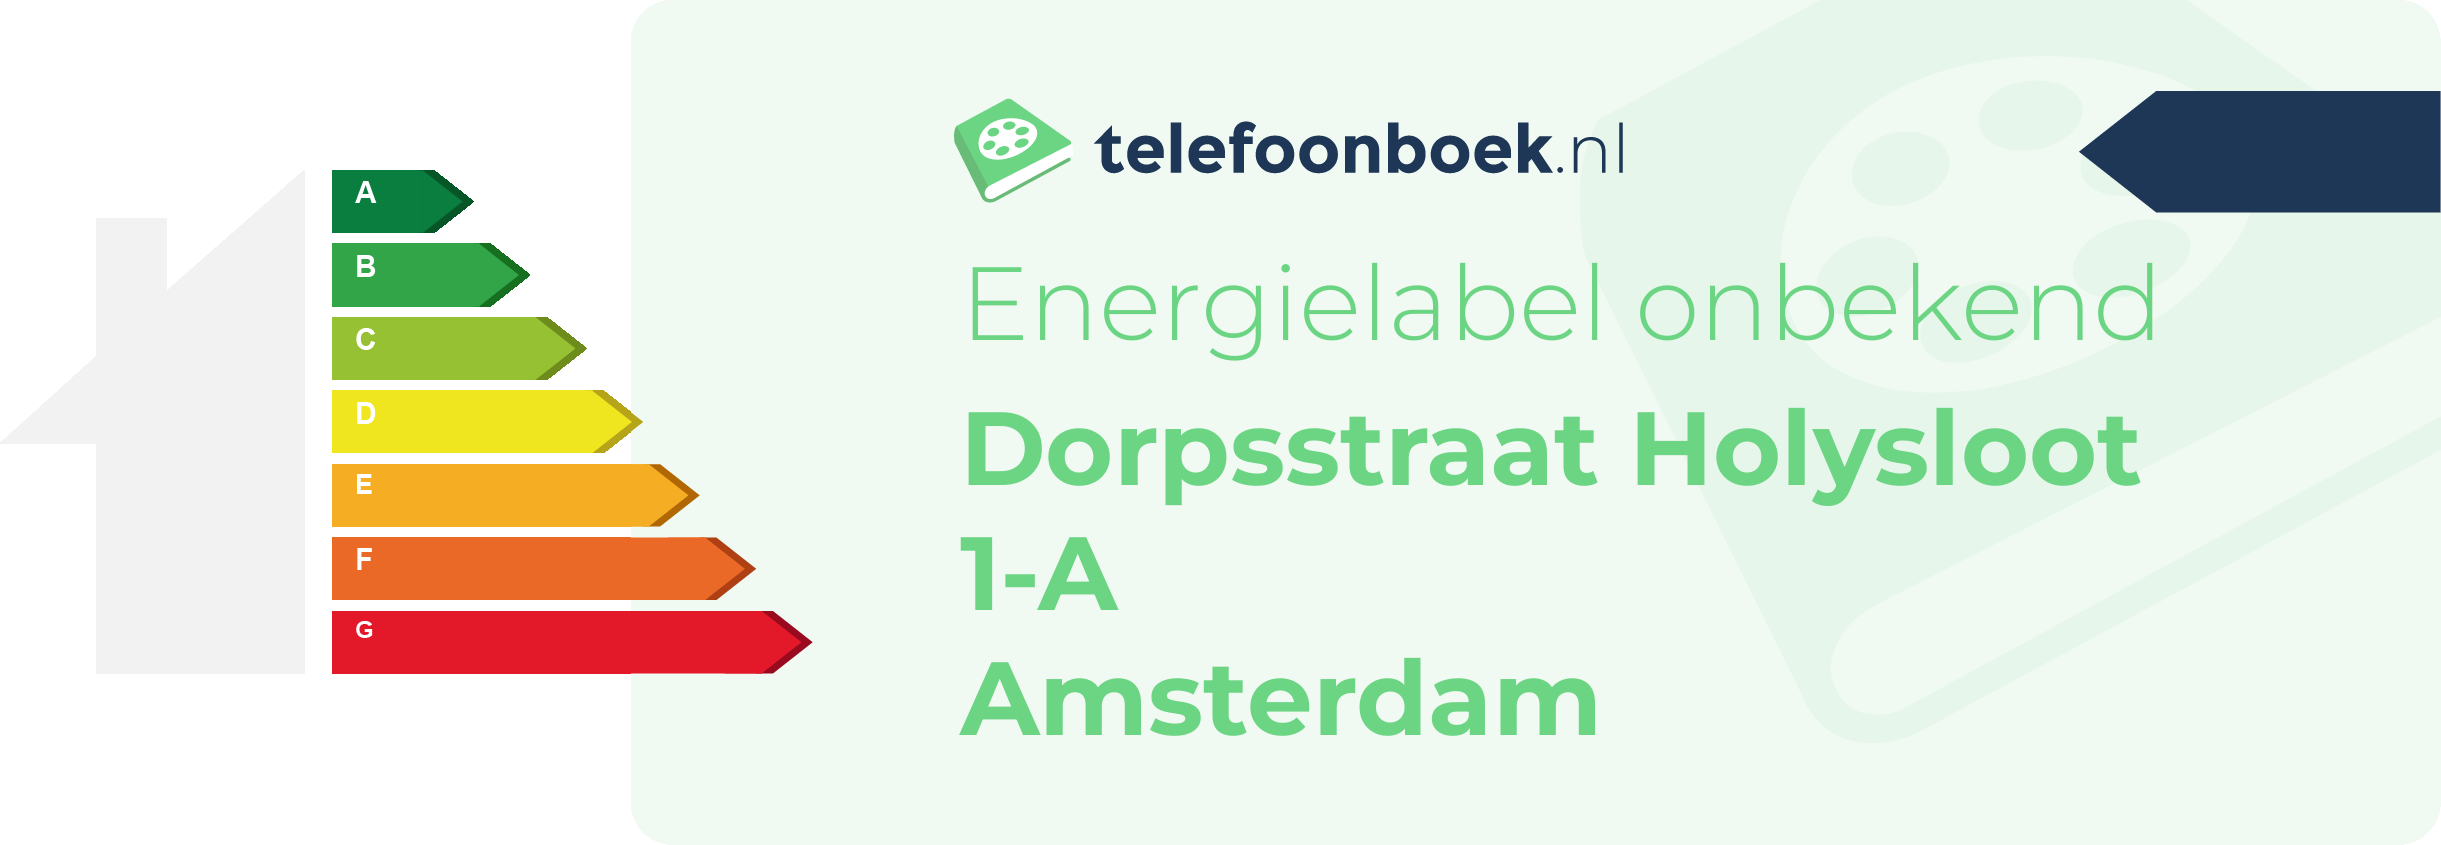 Energielabel Dorpsstraat Holysloot 1-A Amsterdam